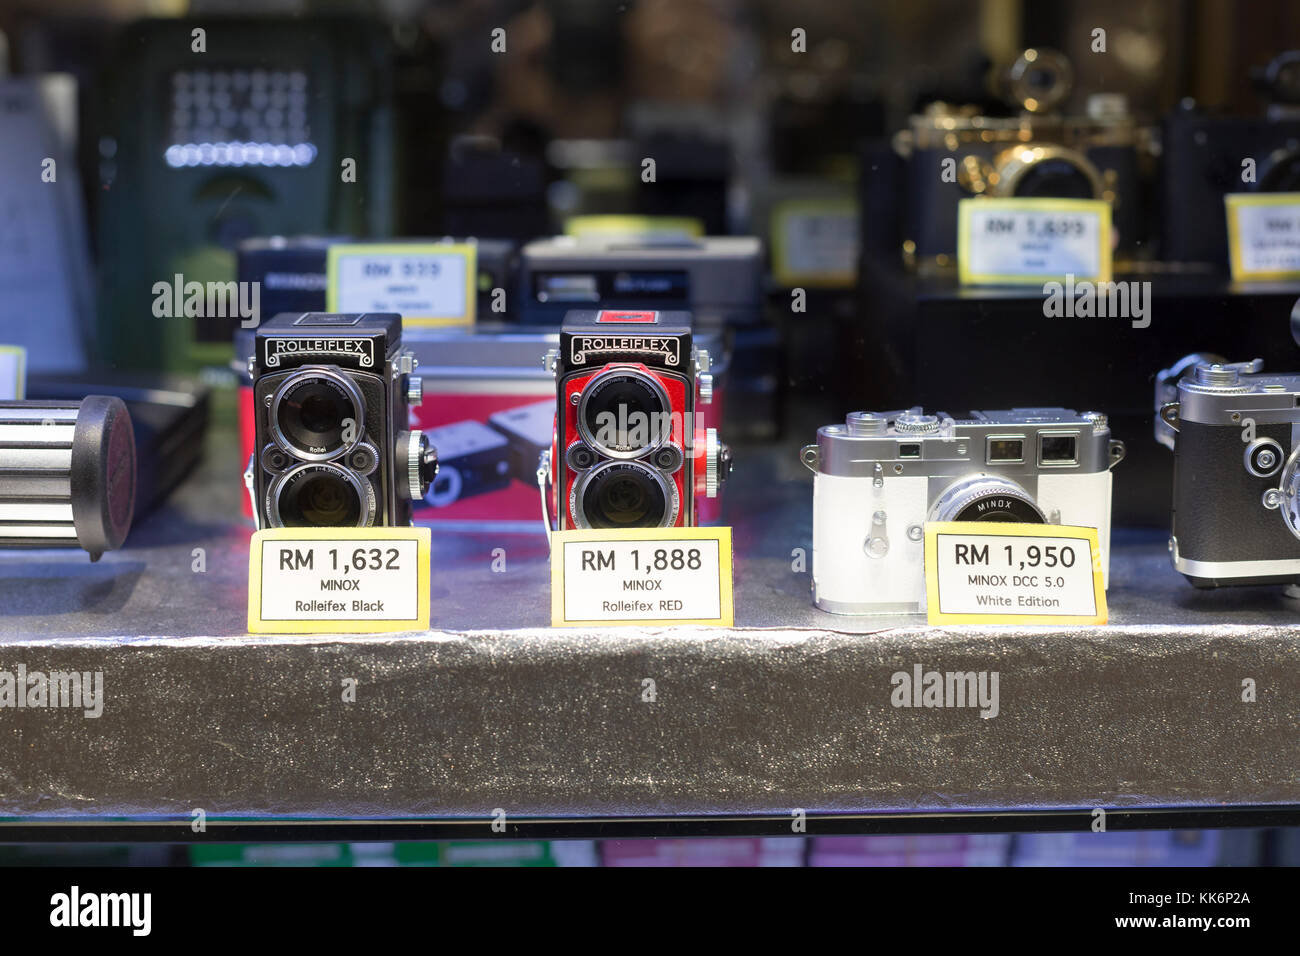 Alte Kameras auf dem Display Stockfoto